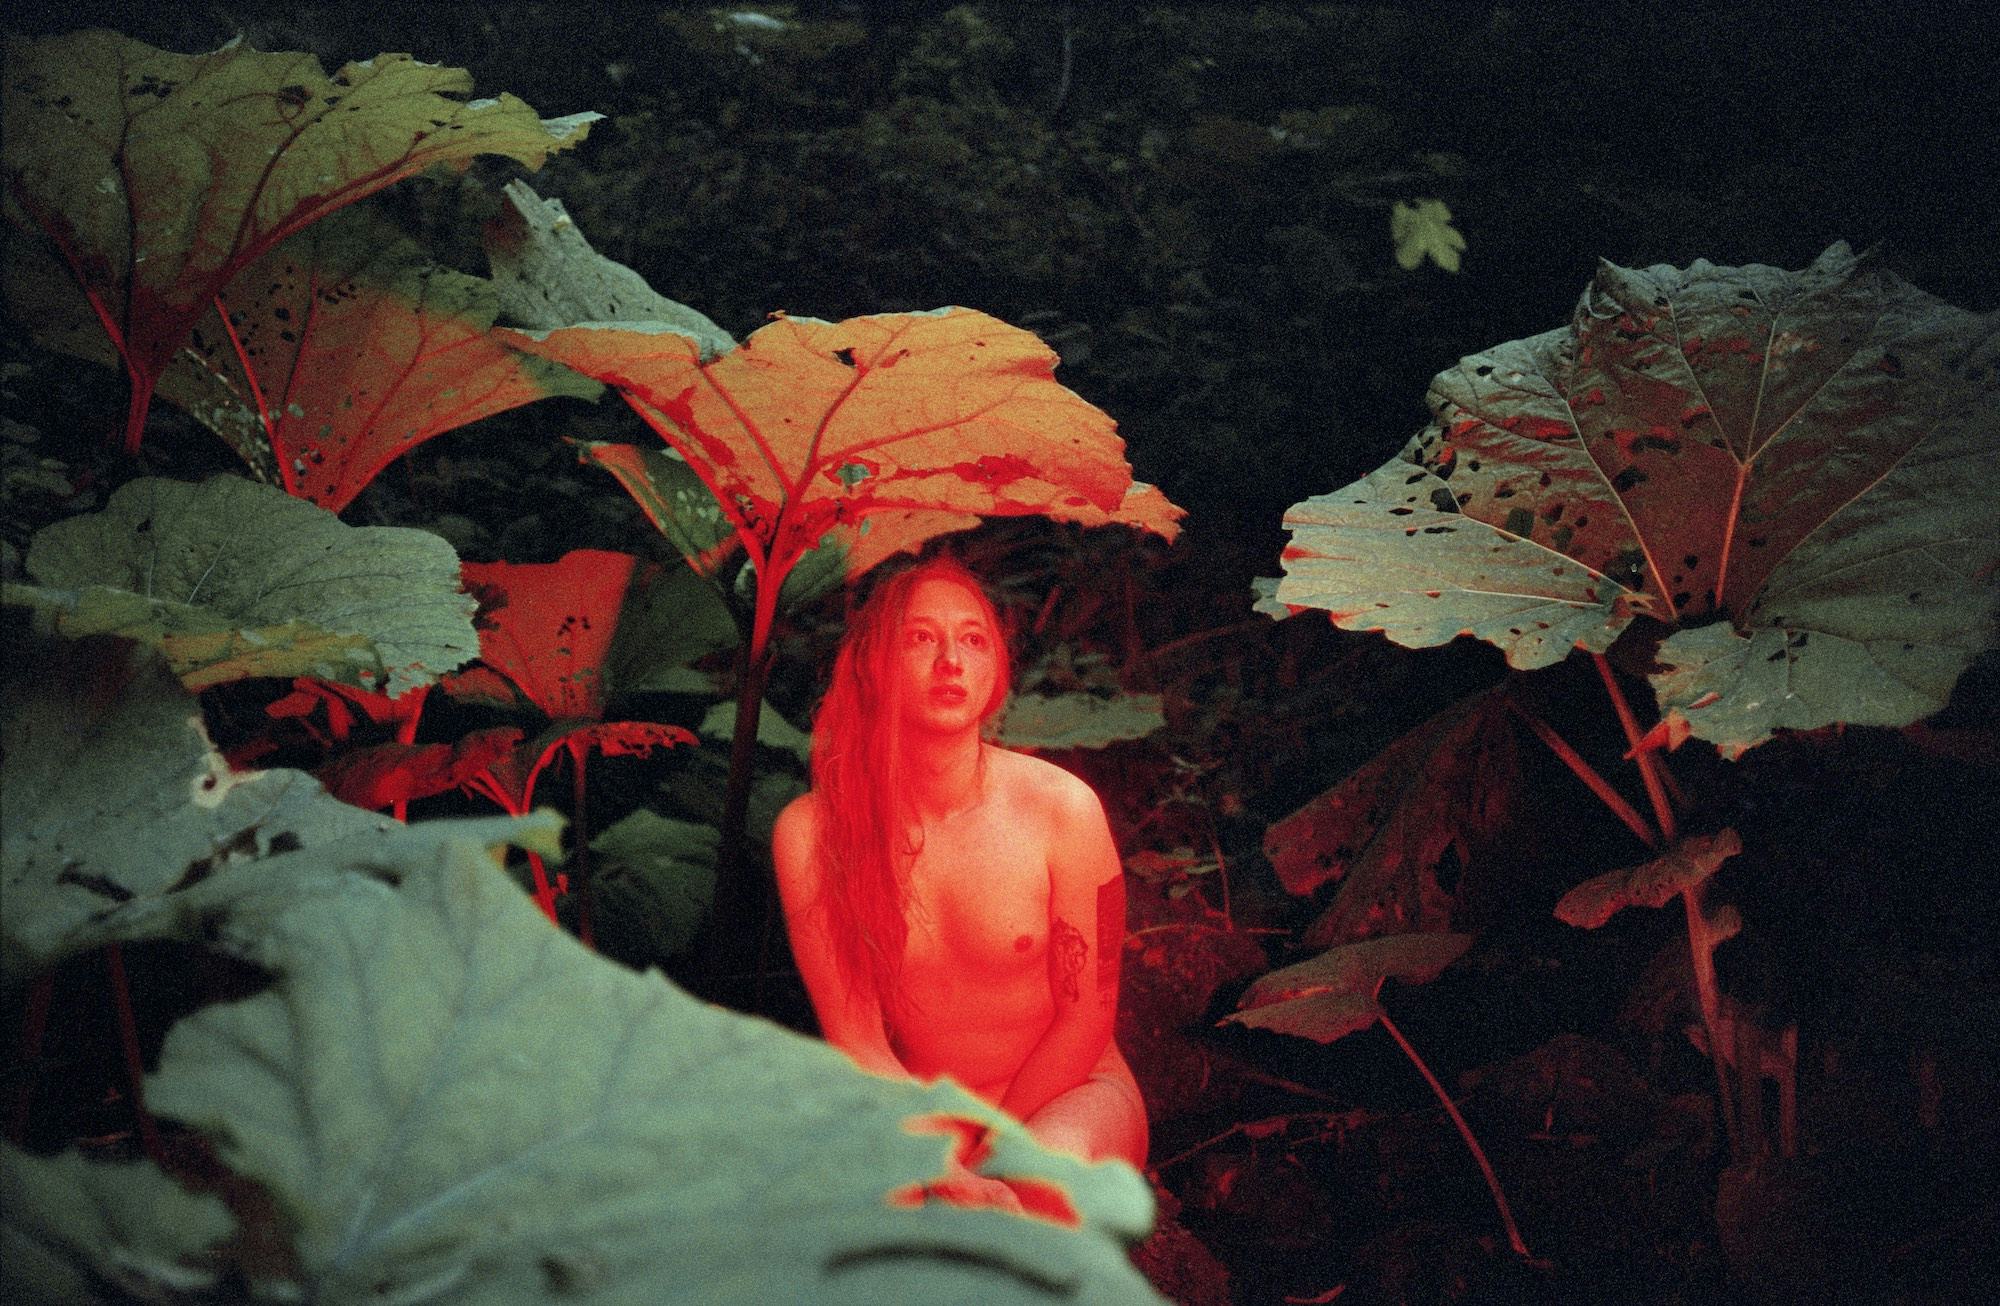 Portrait of a nude person, coloured in red light, in between large plants © Cansu Yıldıran